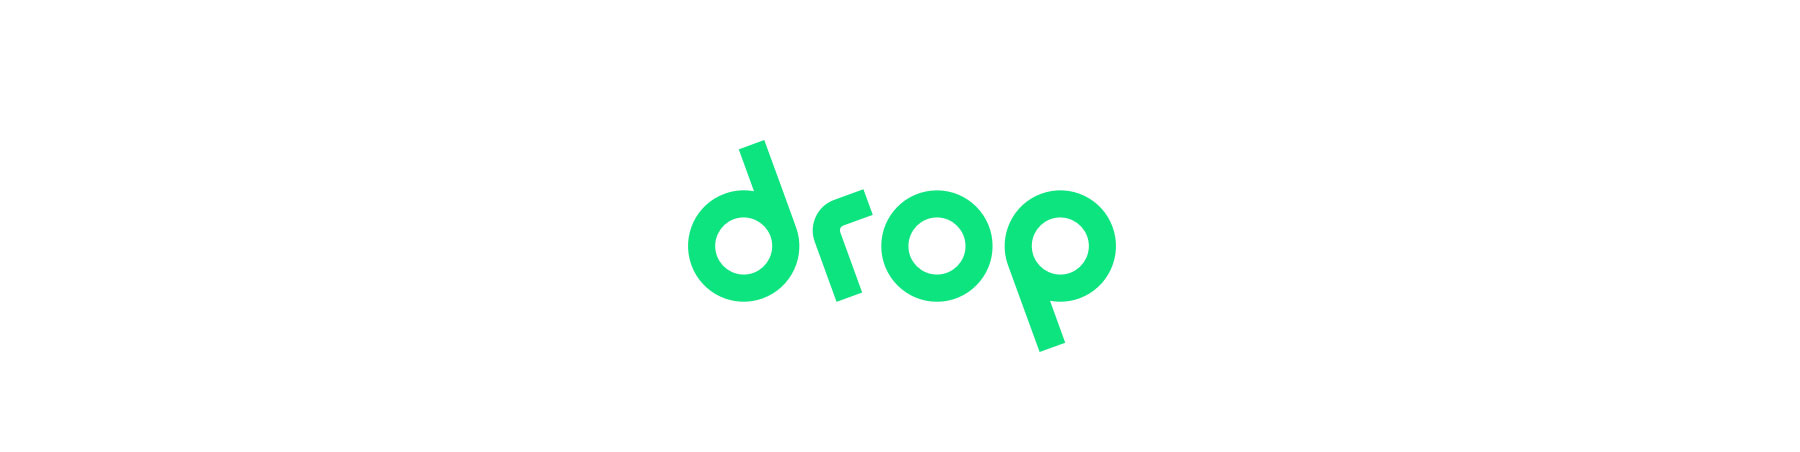 Drop app logo